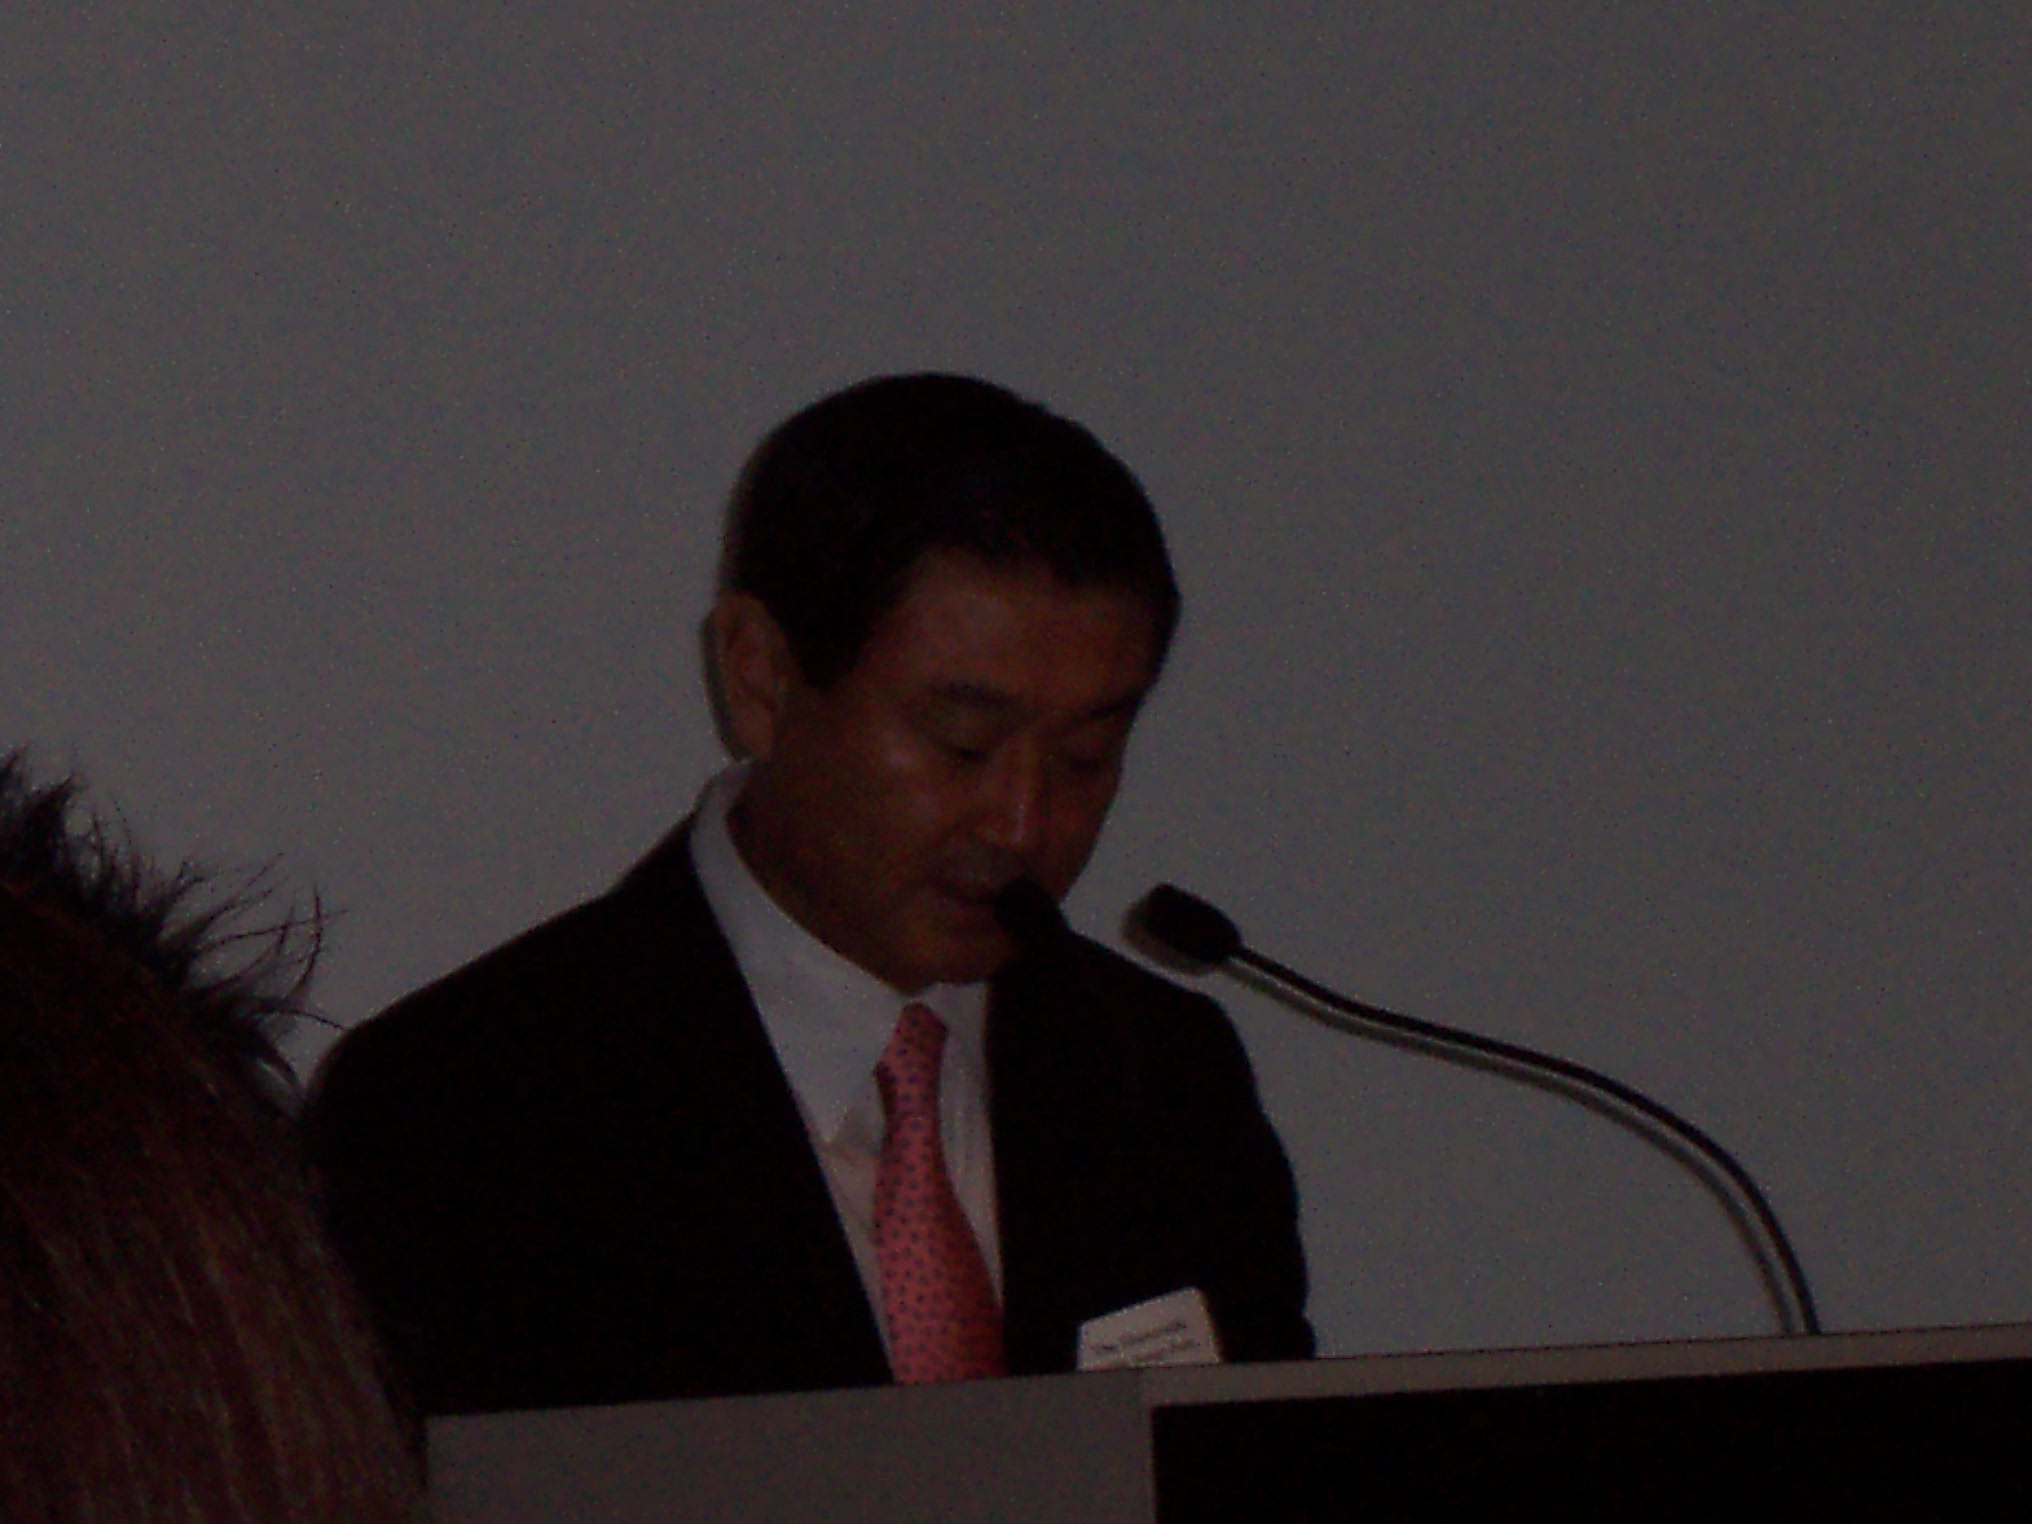 President of Korea Foundation, Yim Sung Jun